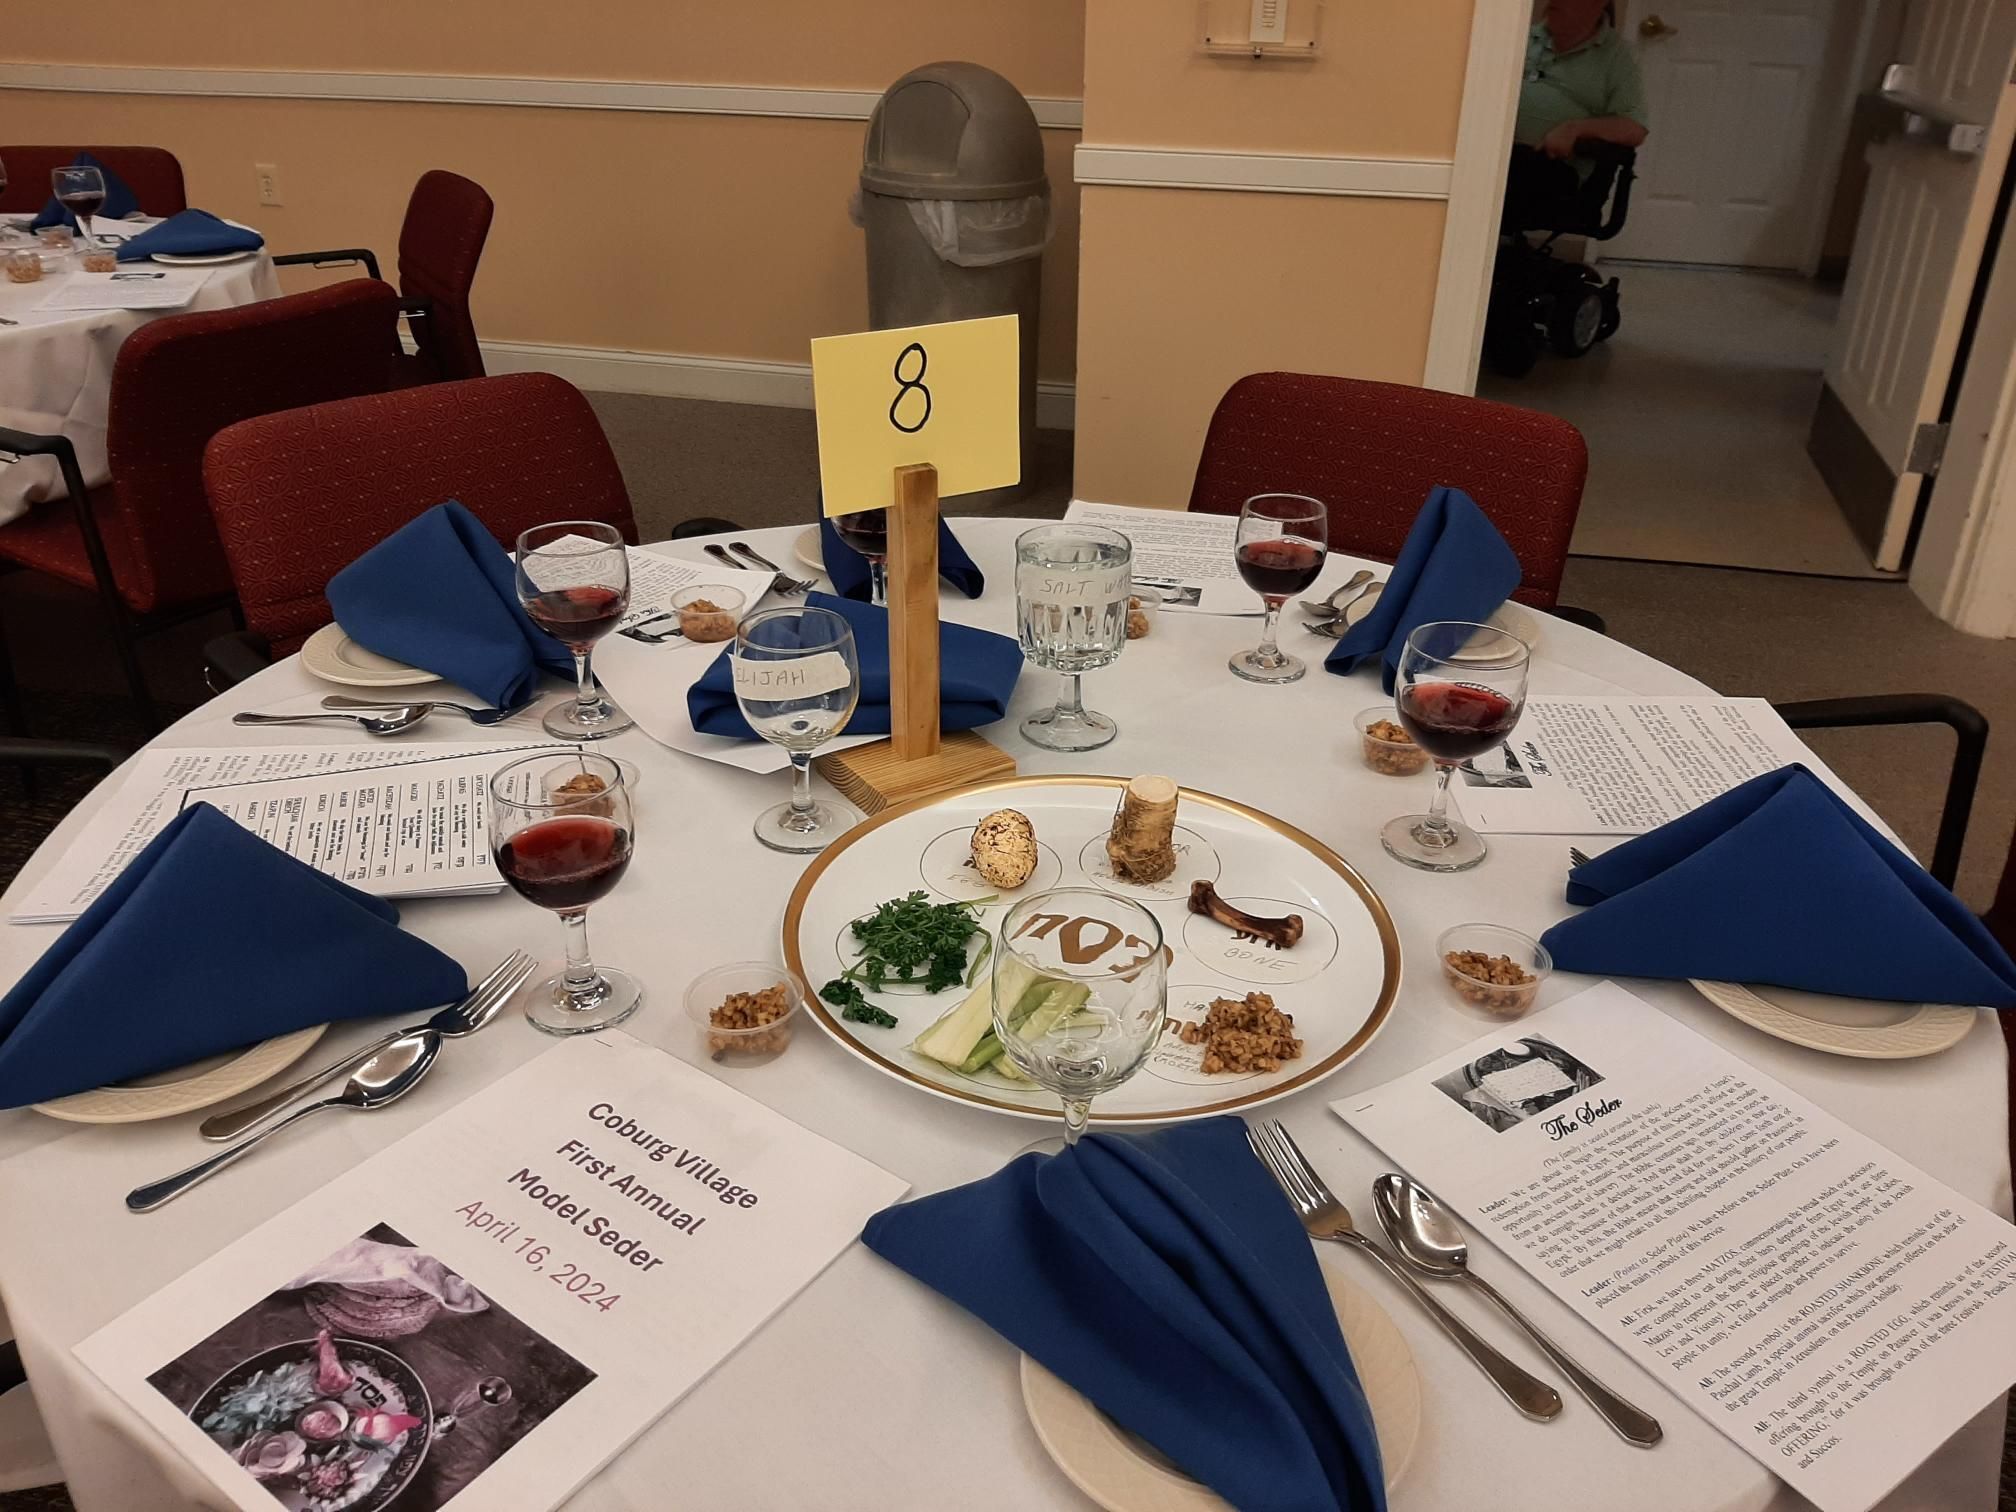 Model Seder table and seder plate